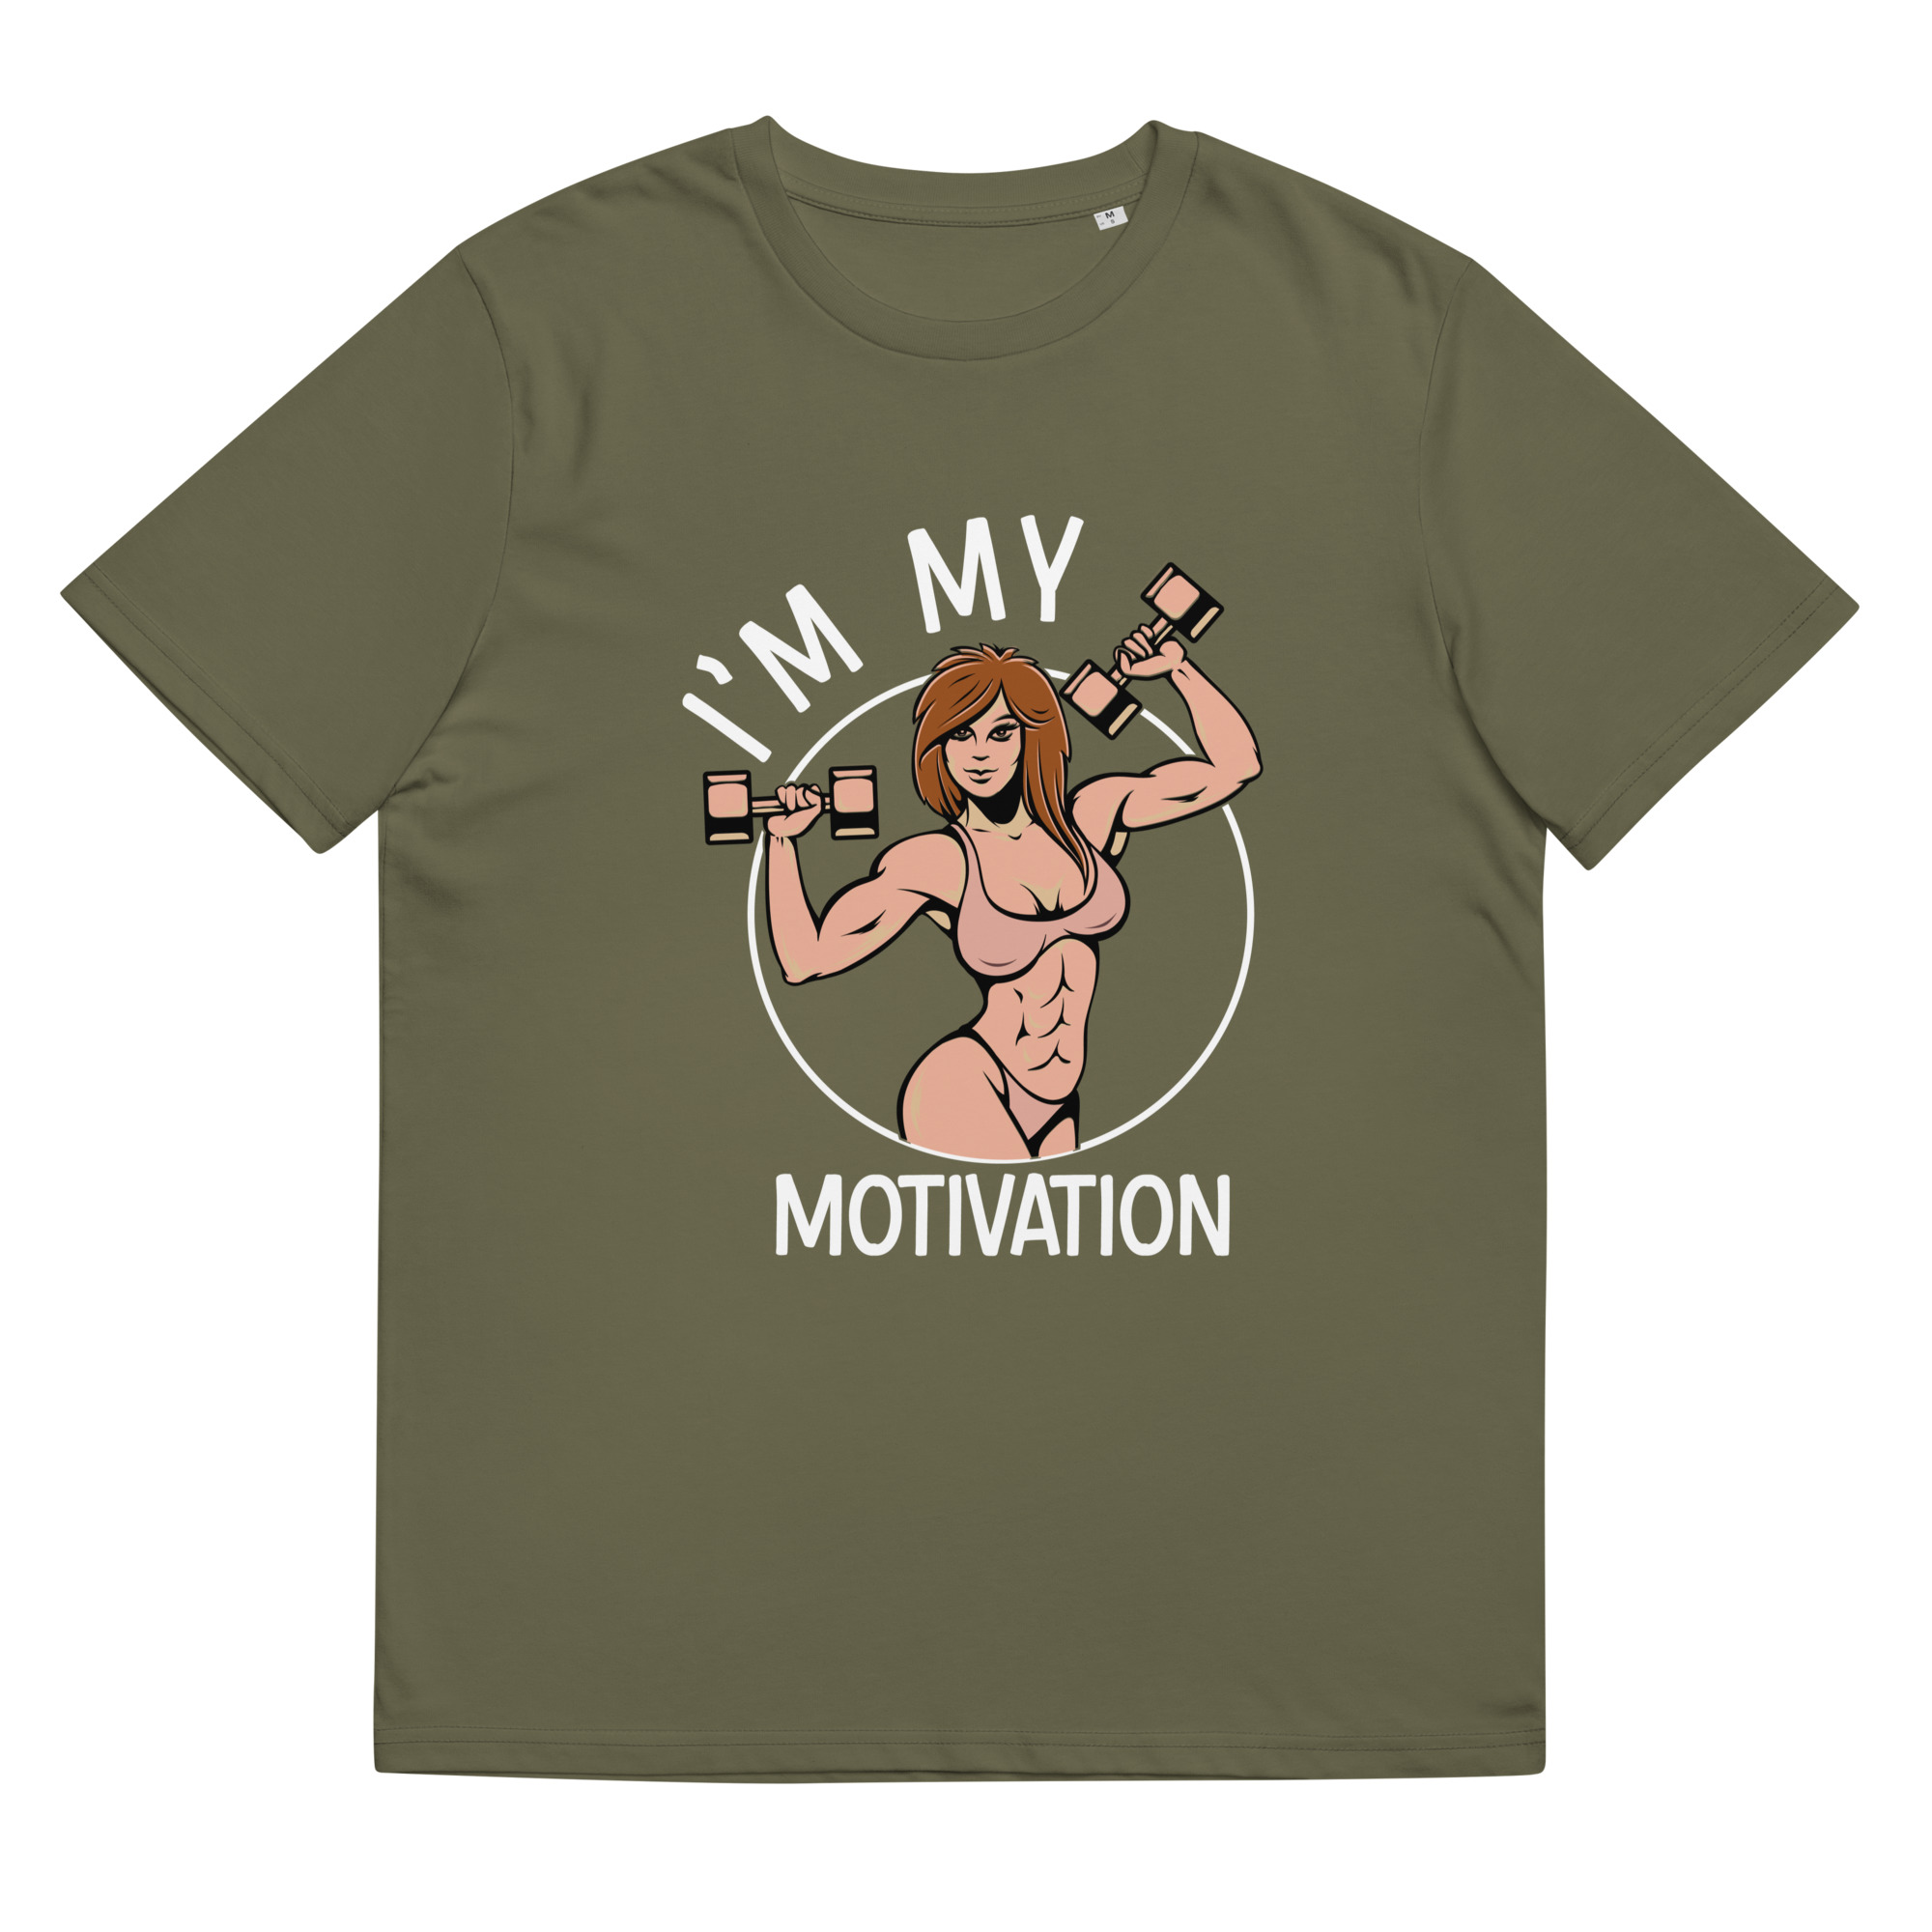 I'm My Motivation - Organic Unisex Motivational T-Shirt